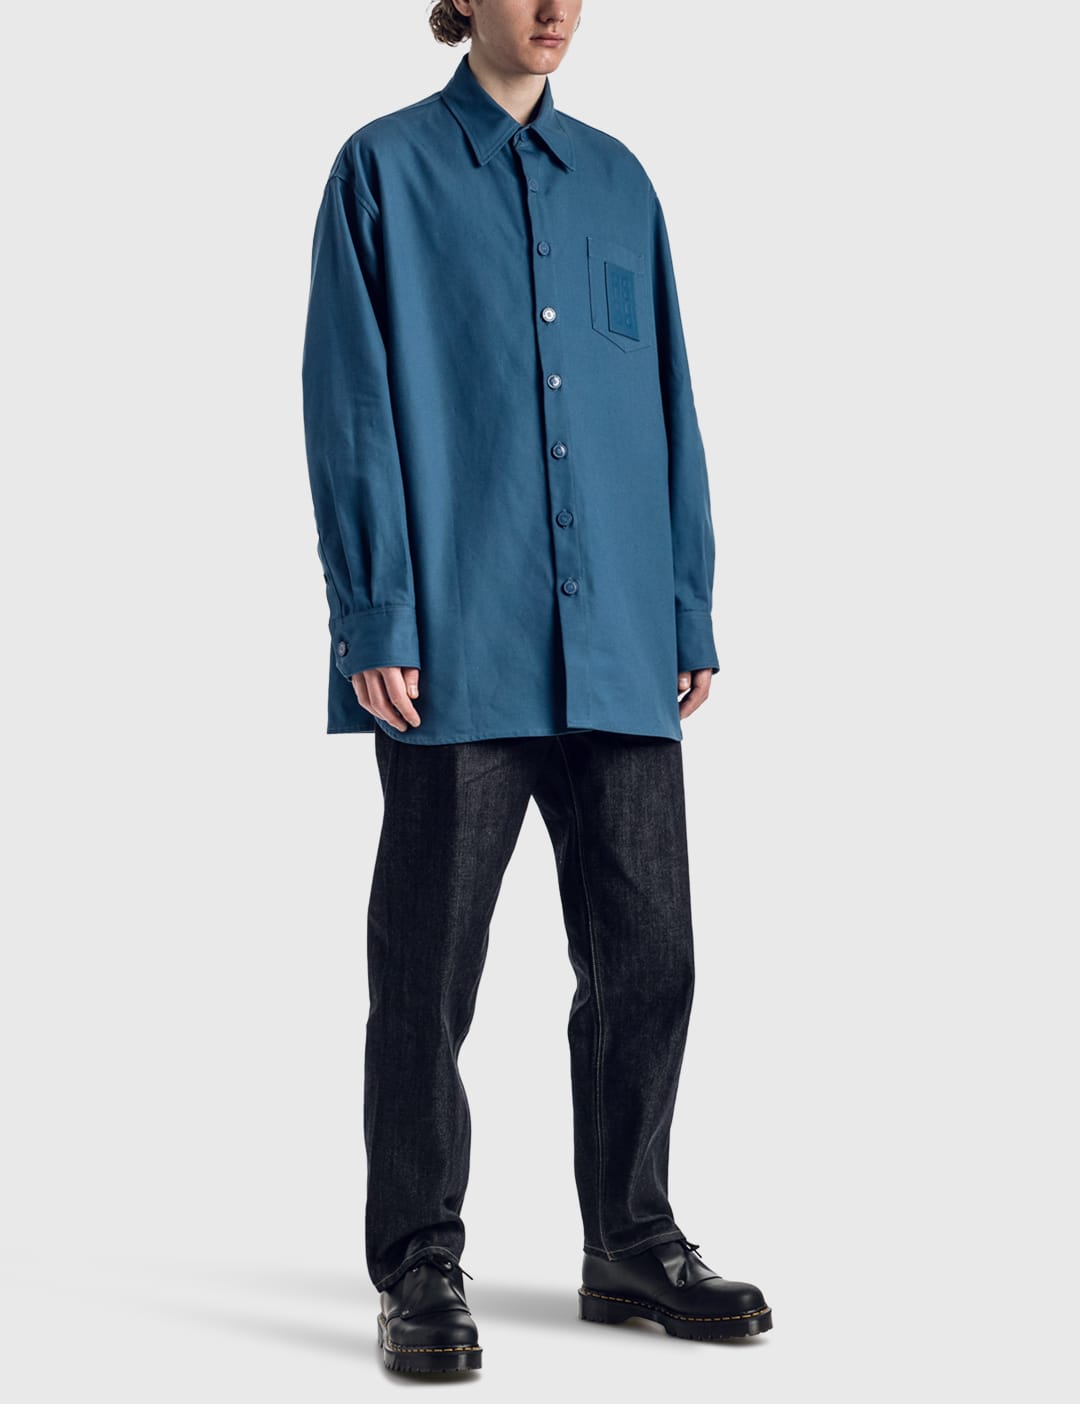 Raf Simons - Oversized R Pin Denim Shirt | HBX - Globally Curated